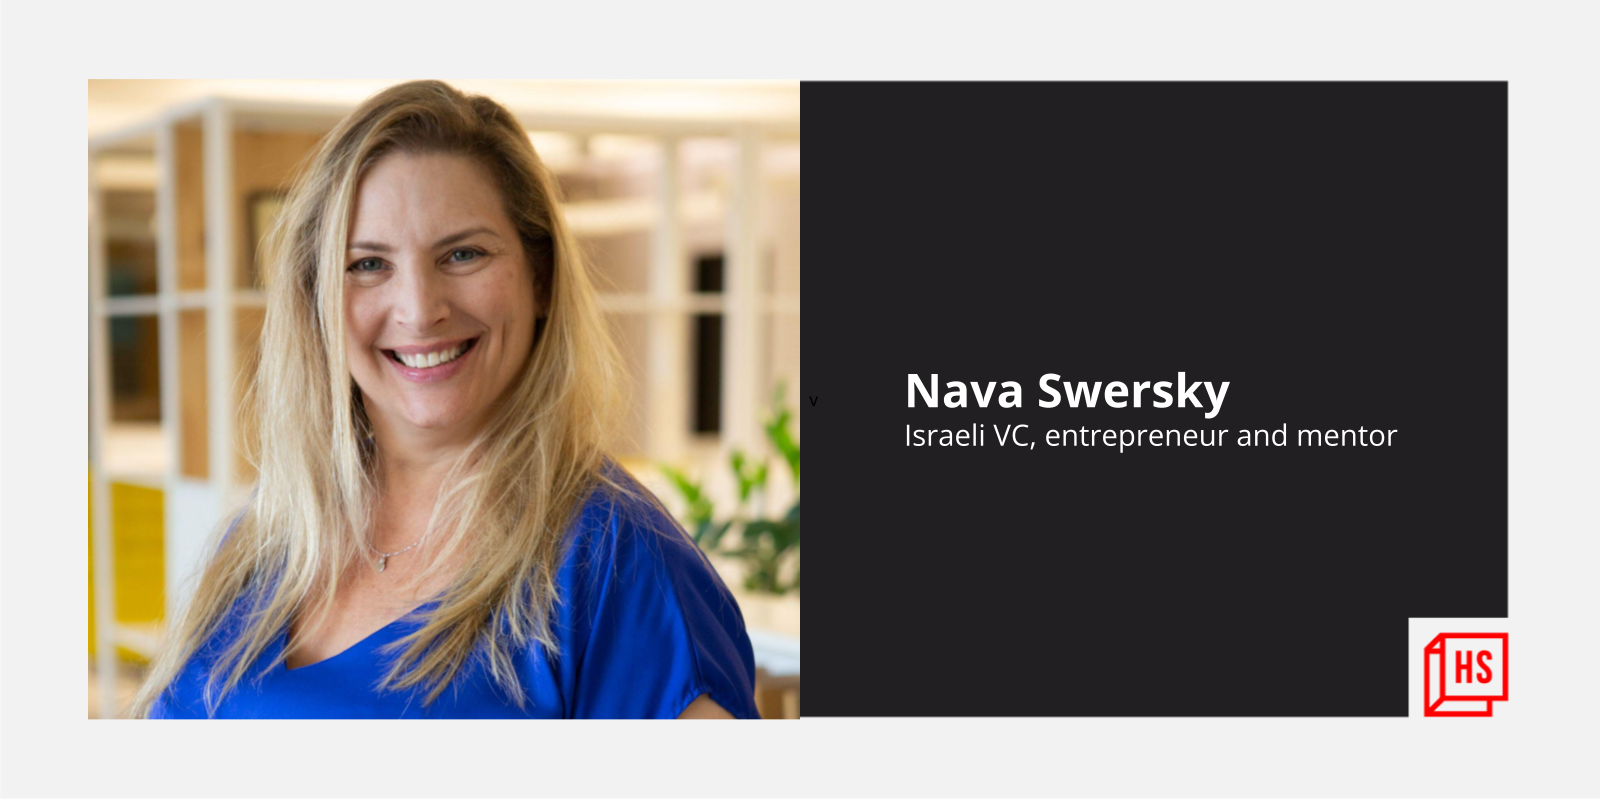 Mentoring women isn’t enough, we must champion them: Nava Swersky, leading Israeli VC, entrepreneur 
